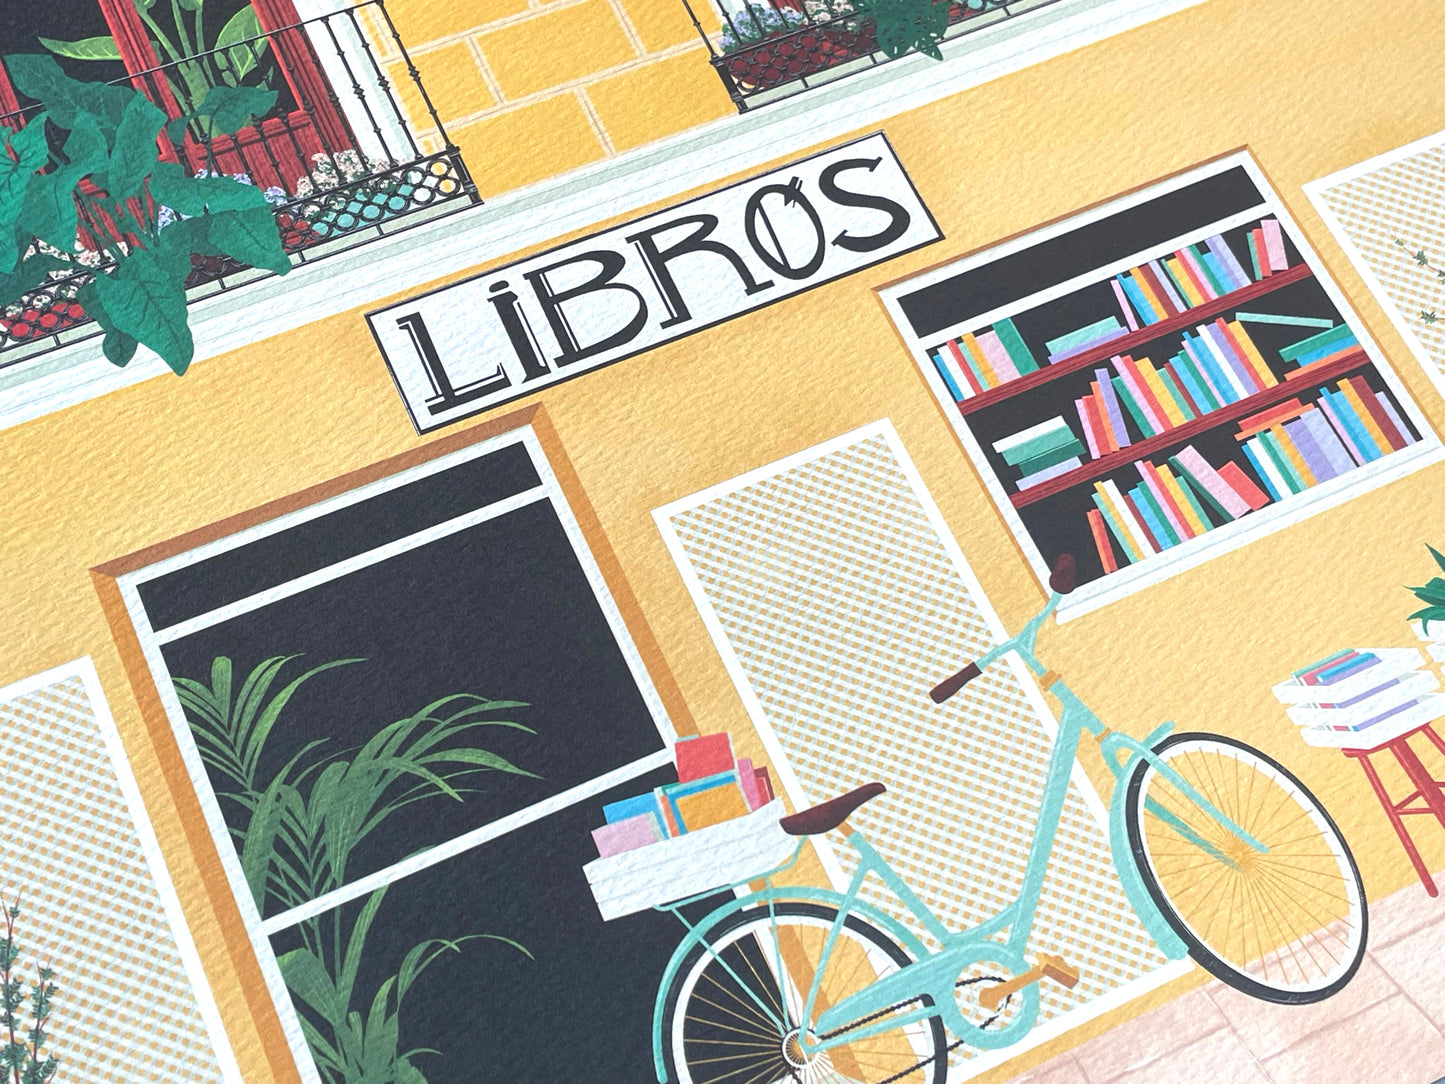 Madrid Libros Bookshop Art Print